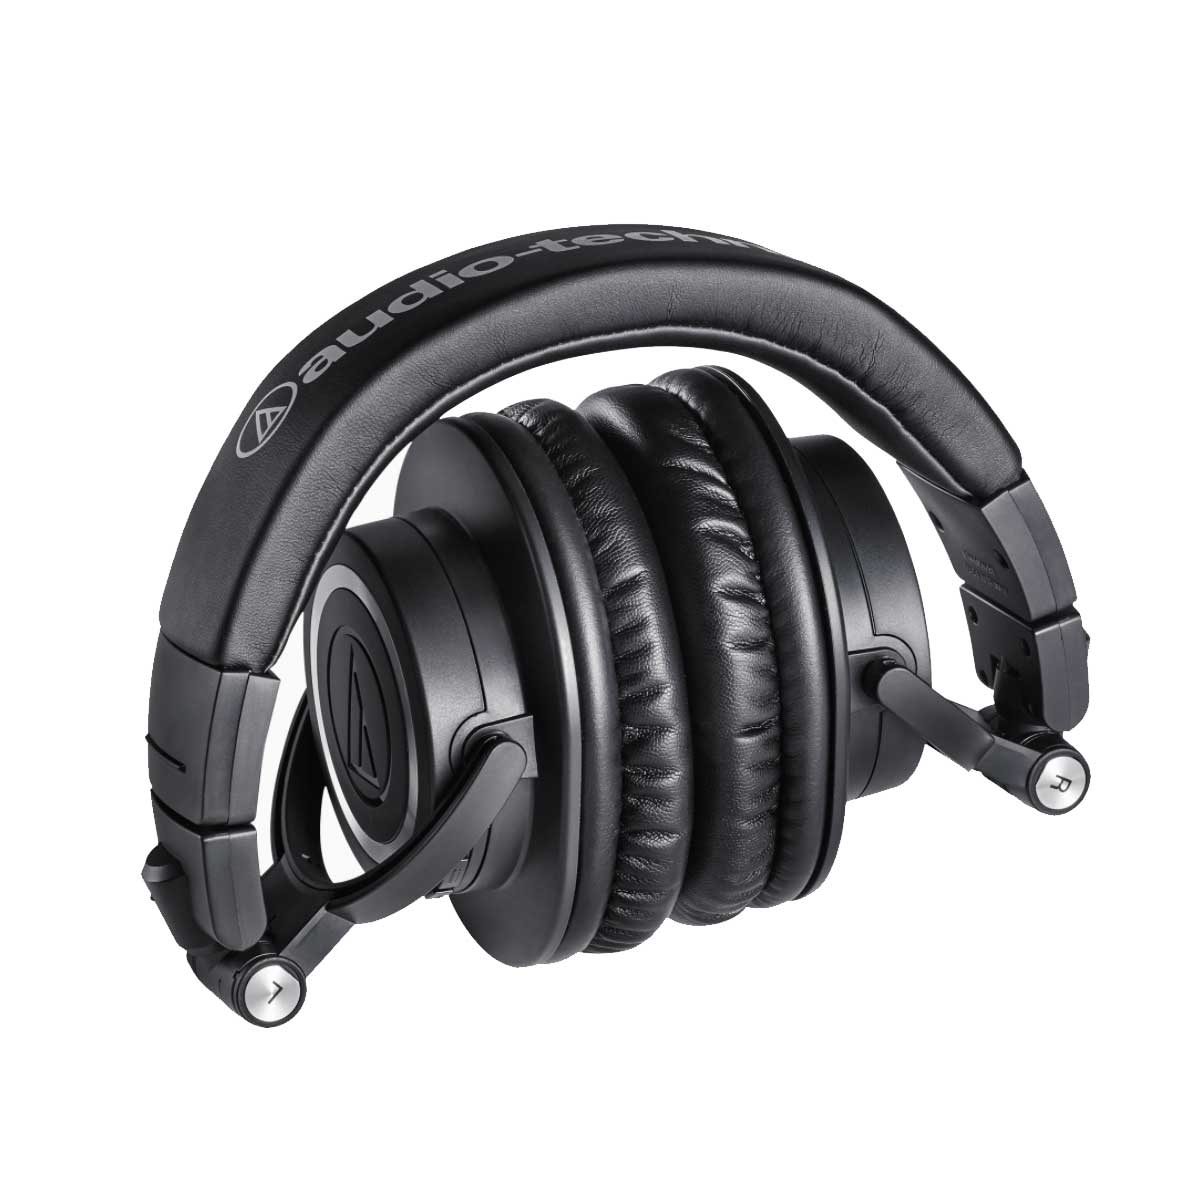 Audio-Technica Consumer ATH-M50XBT2 Auriculares inalámbricos